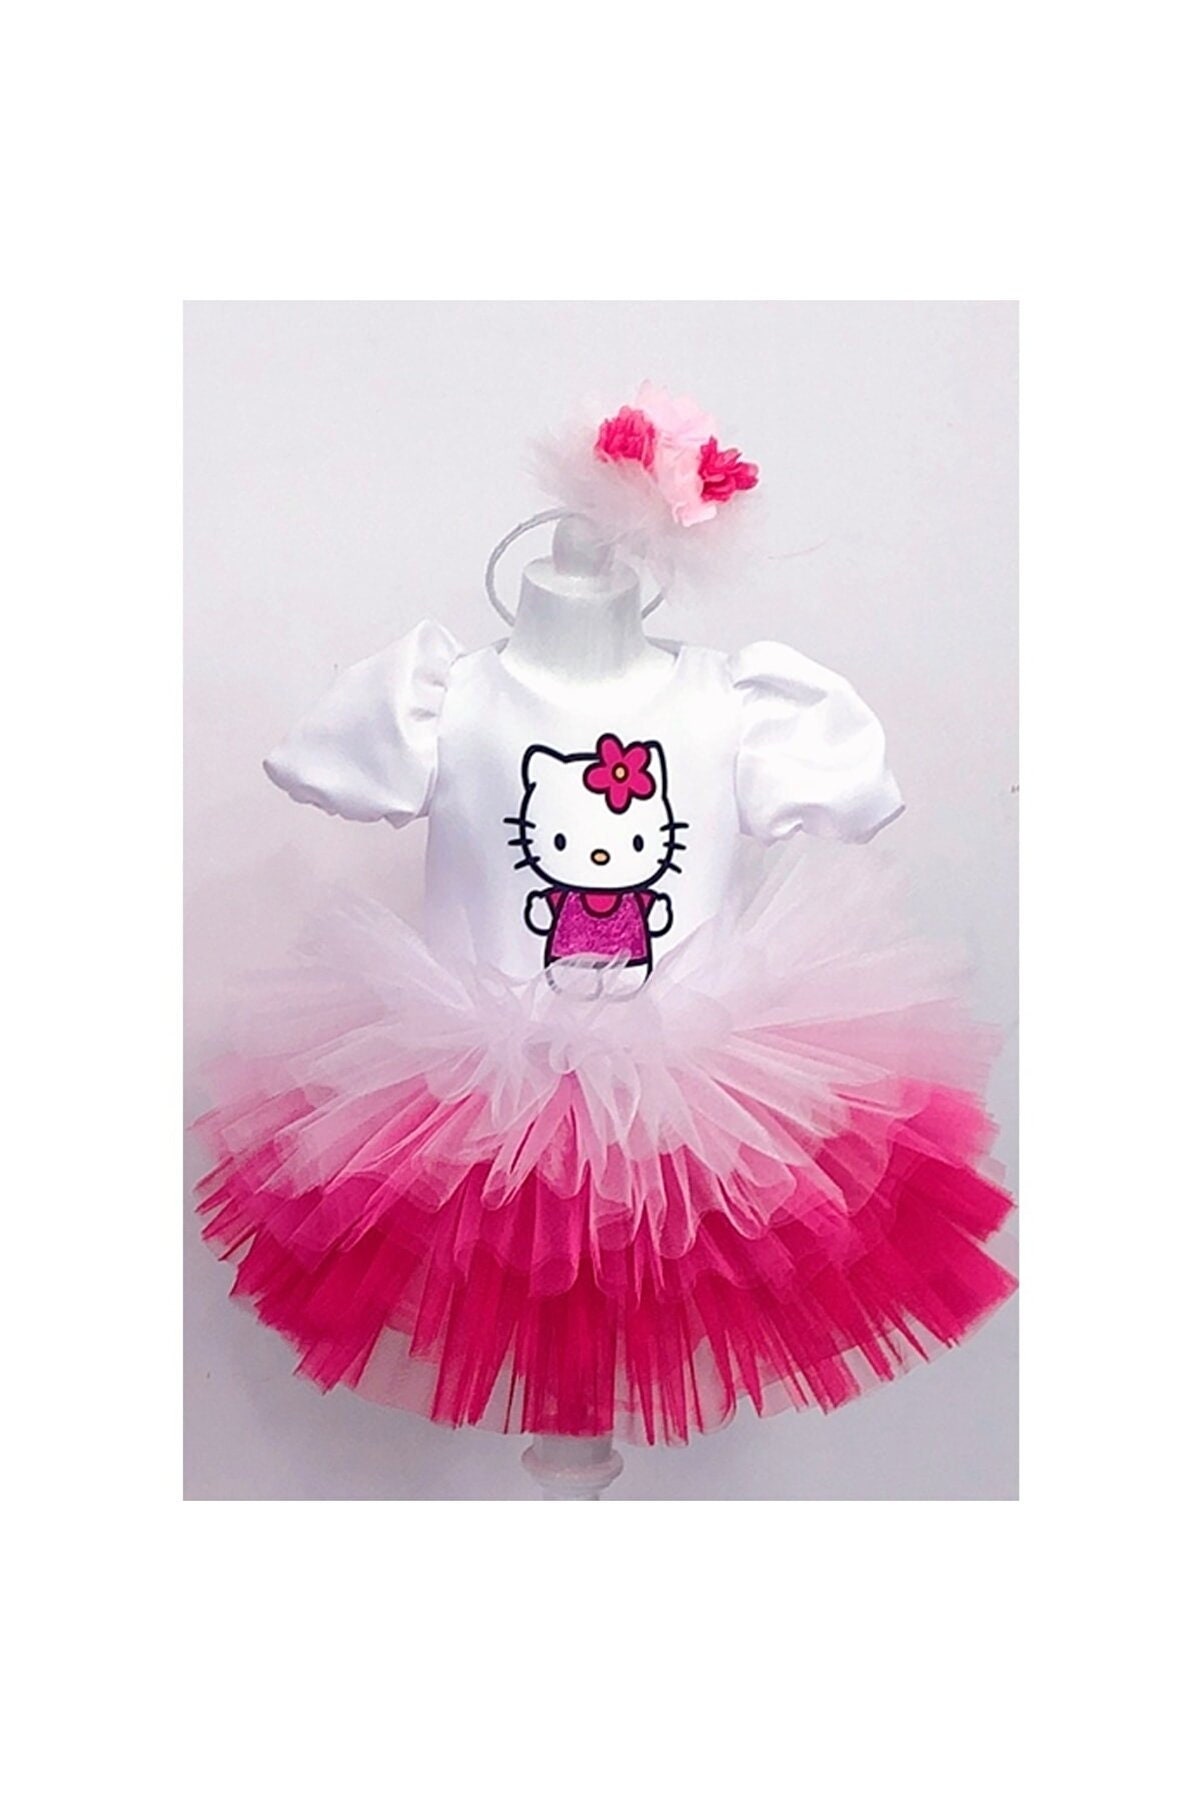 Hello Kitty romantic 💕 | Instagram